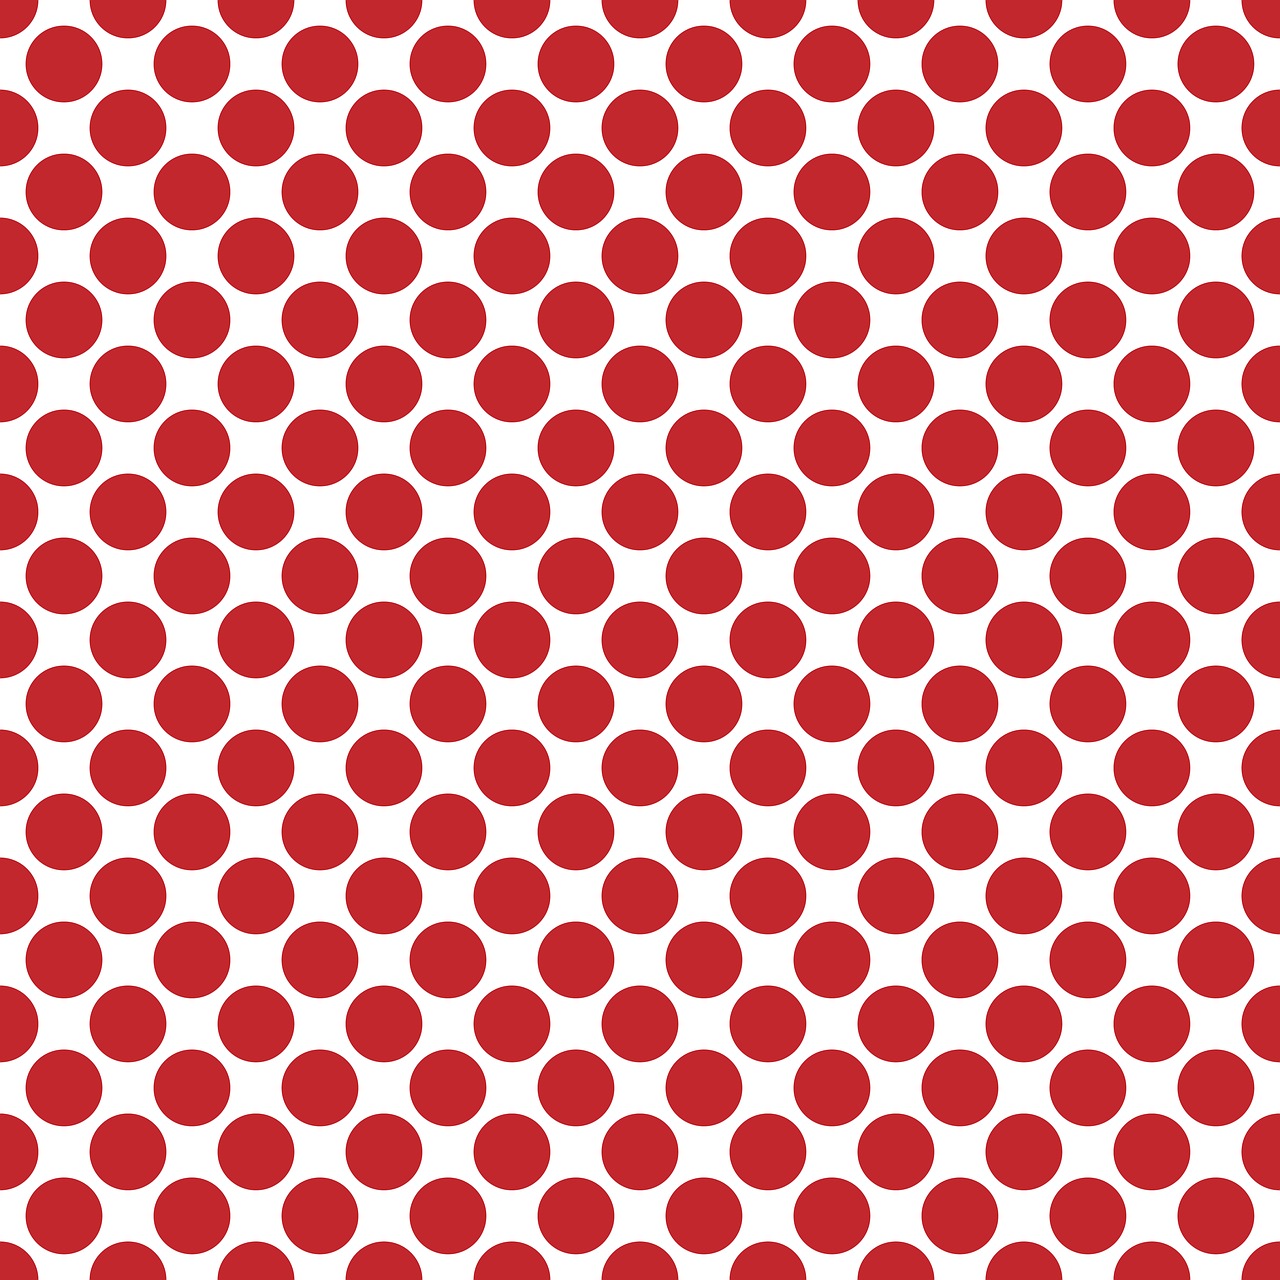 polka dots pattern background free photo